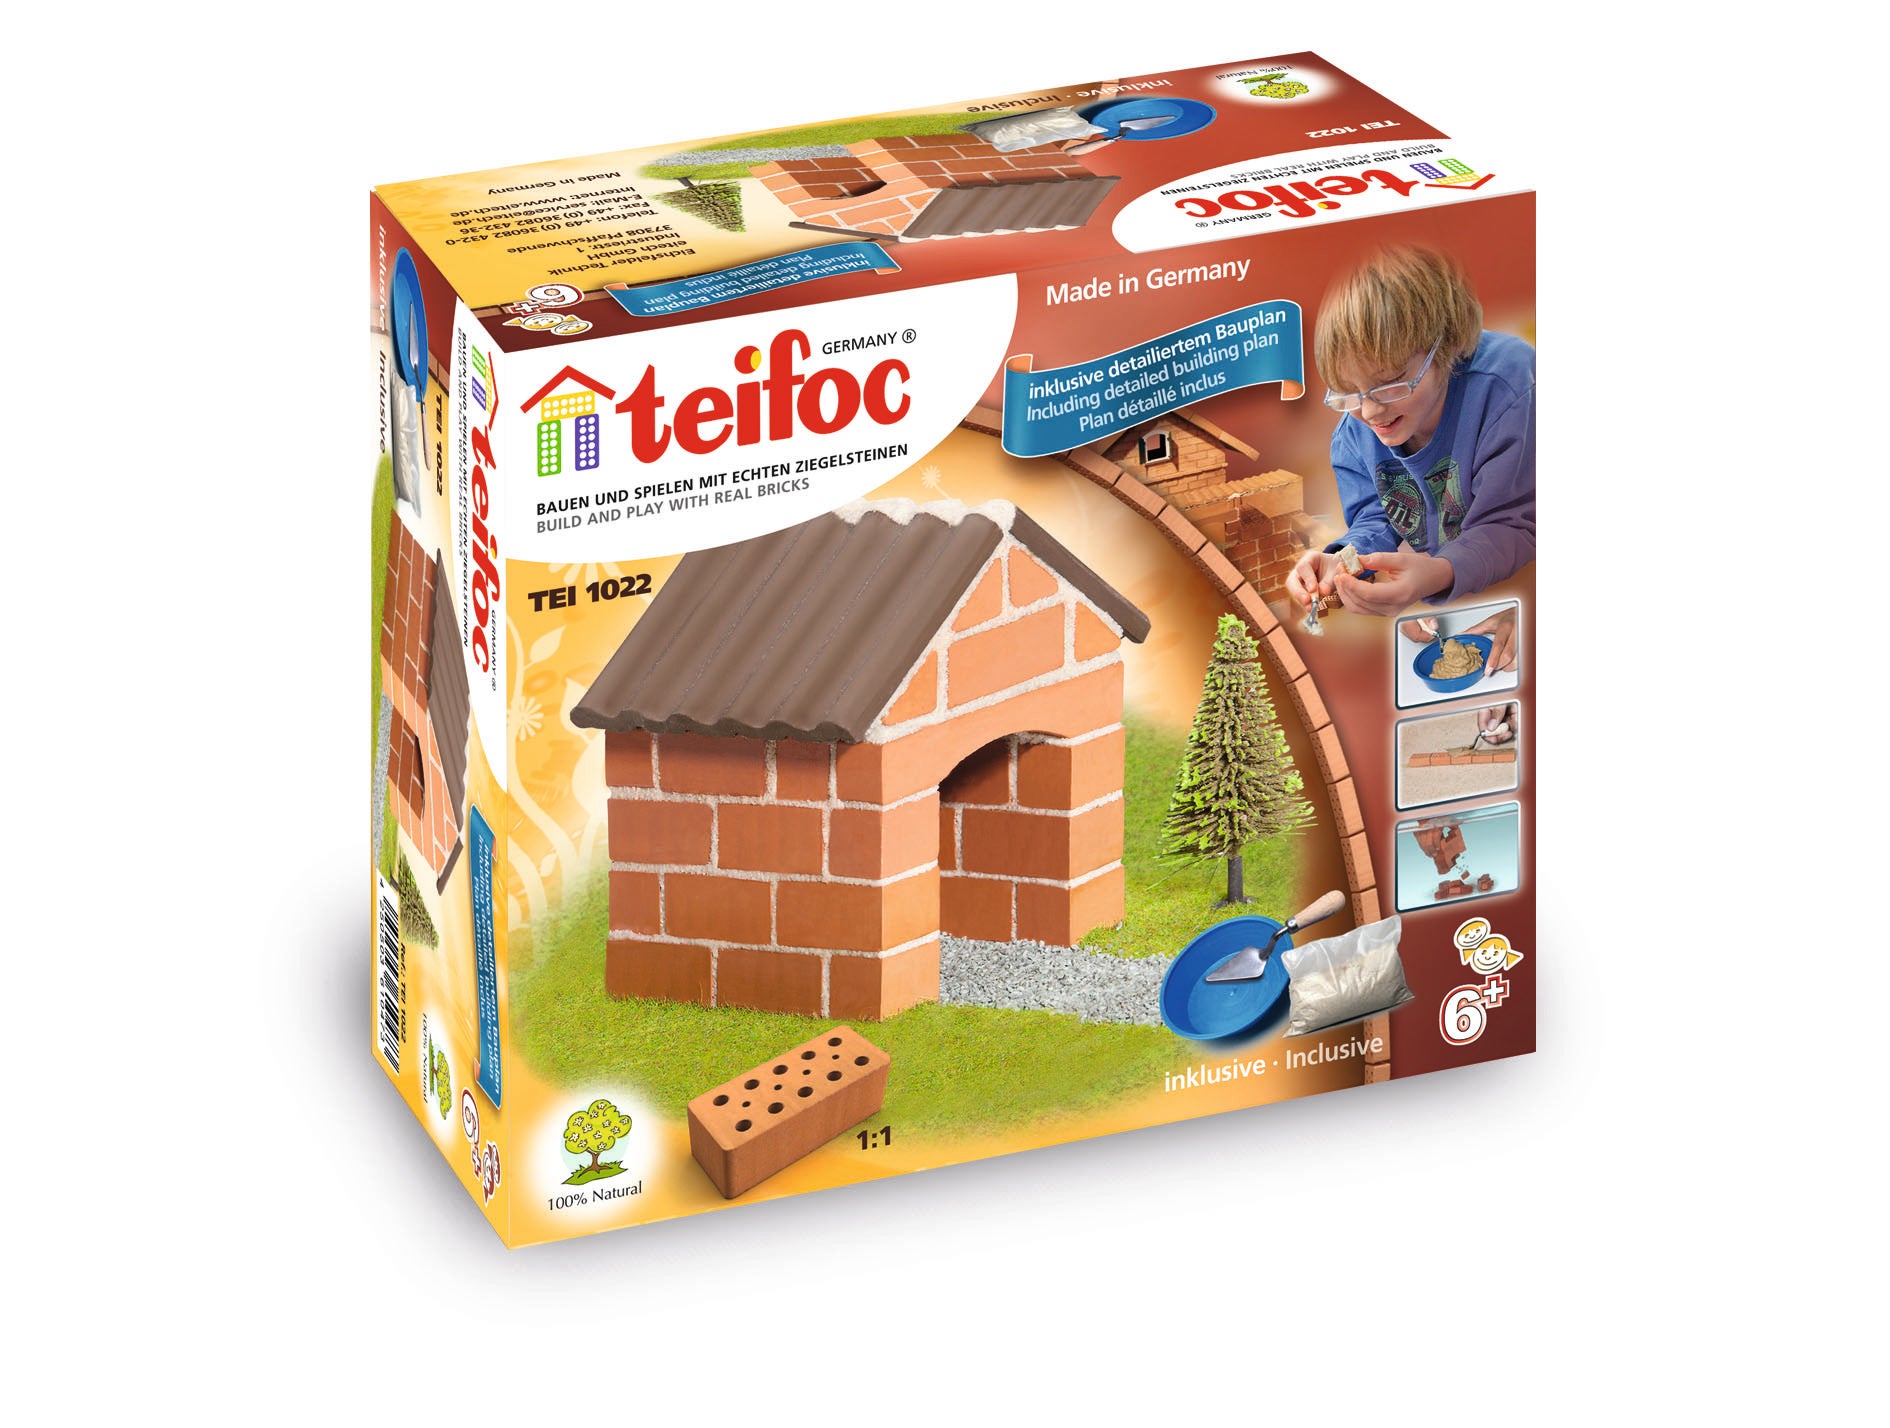 Teifoc Small Cottage Brick Construction Set, 30+ Building Blocks